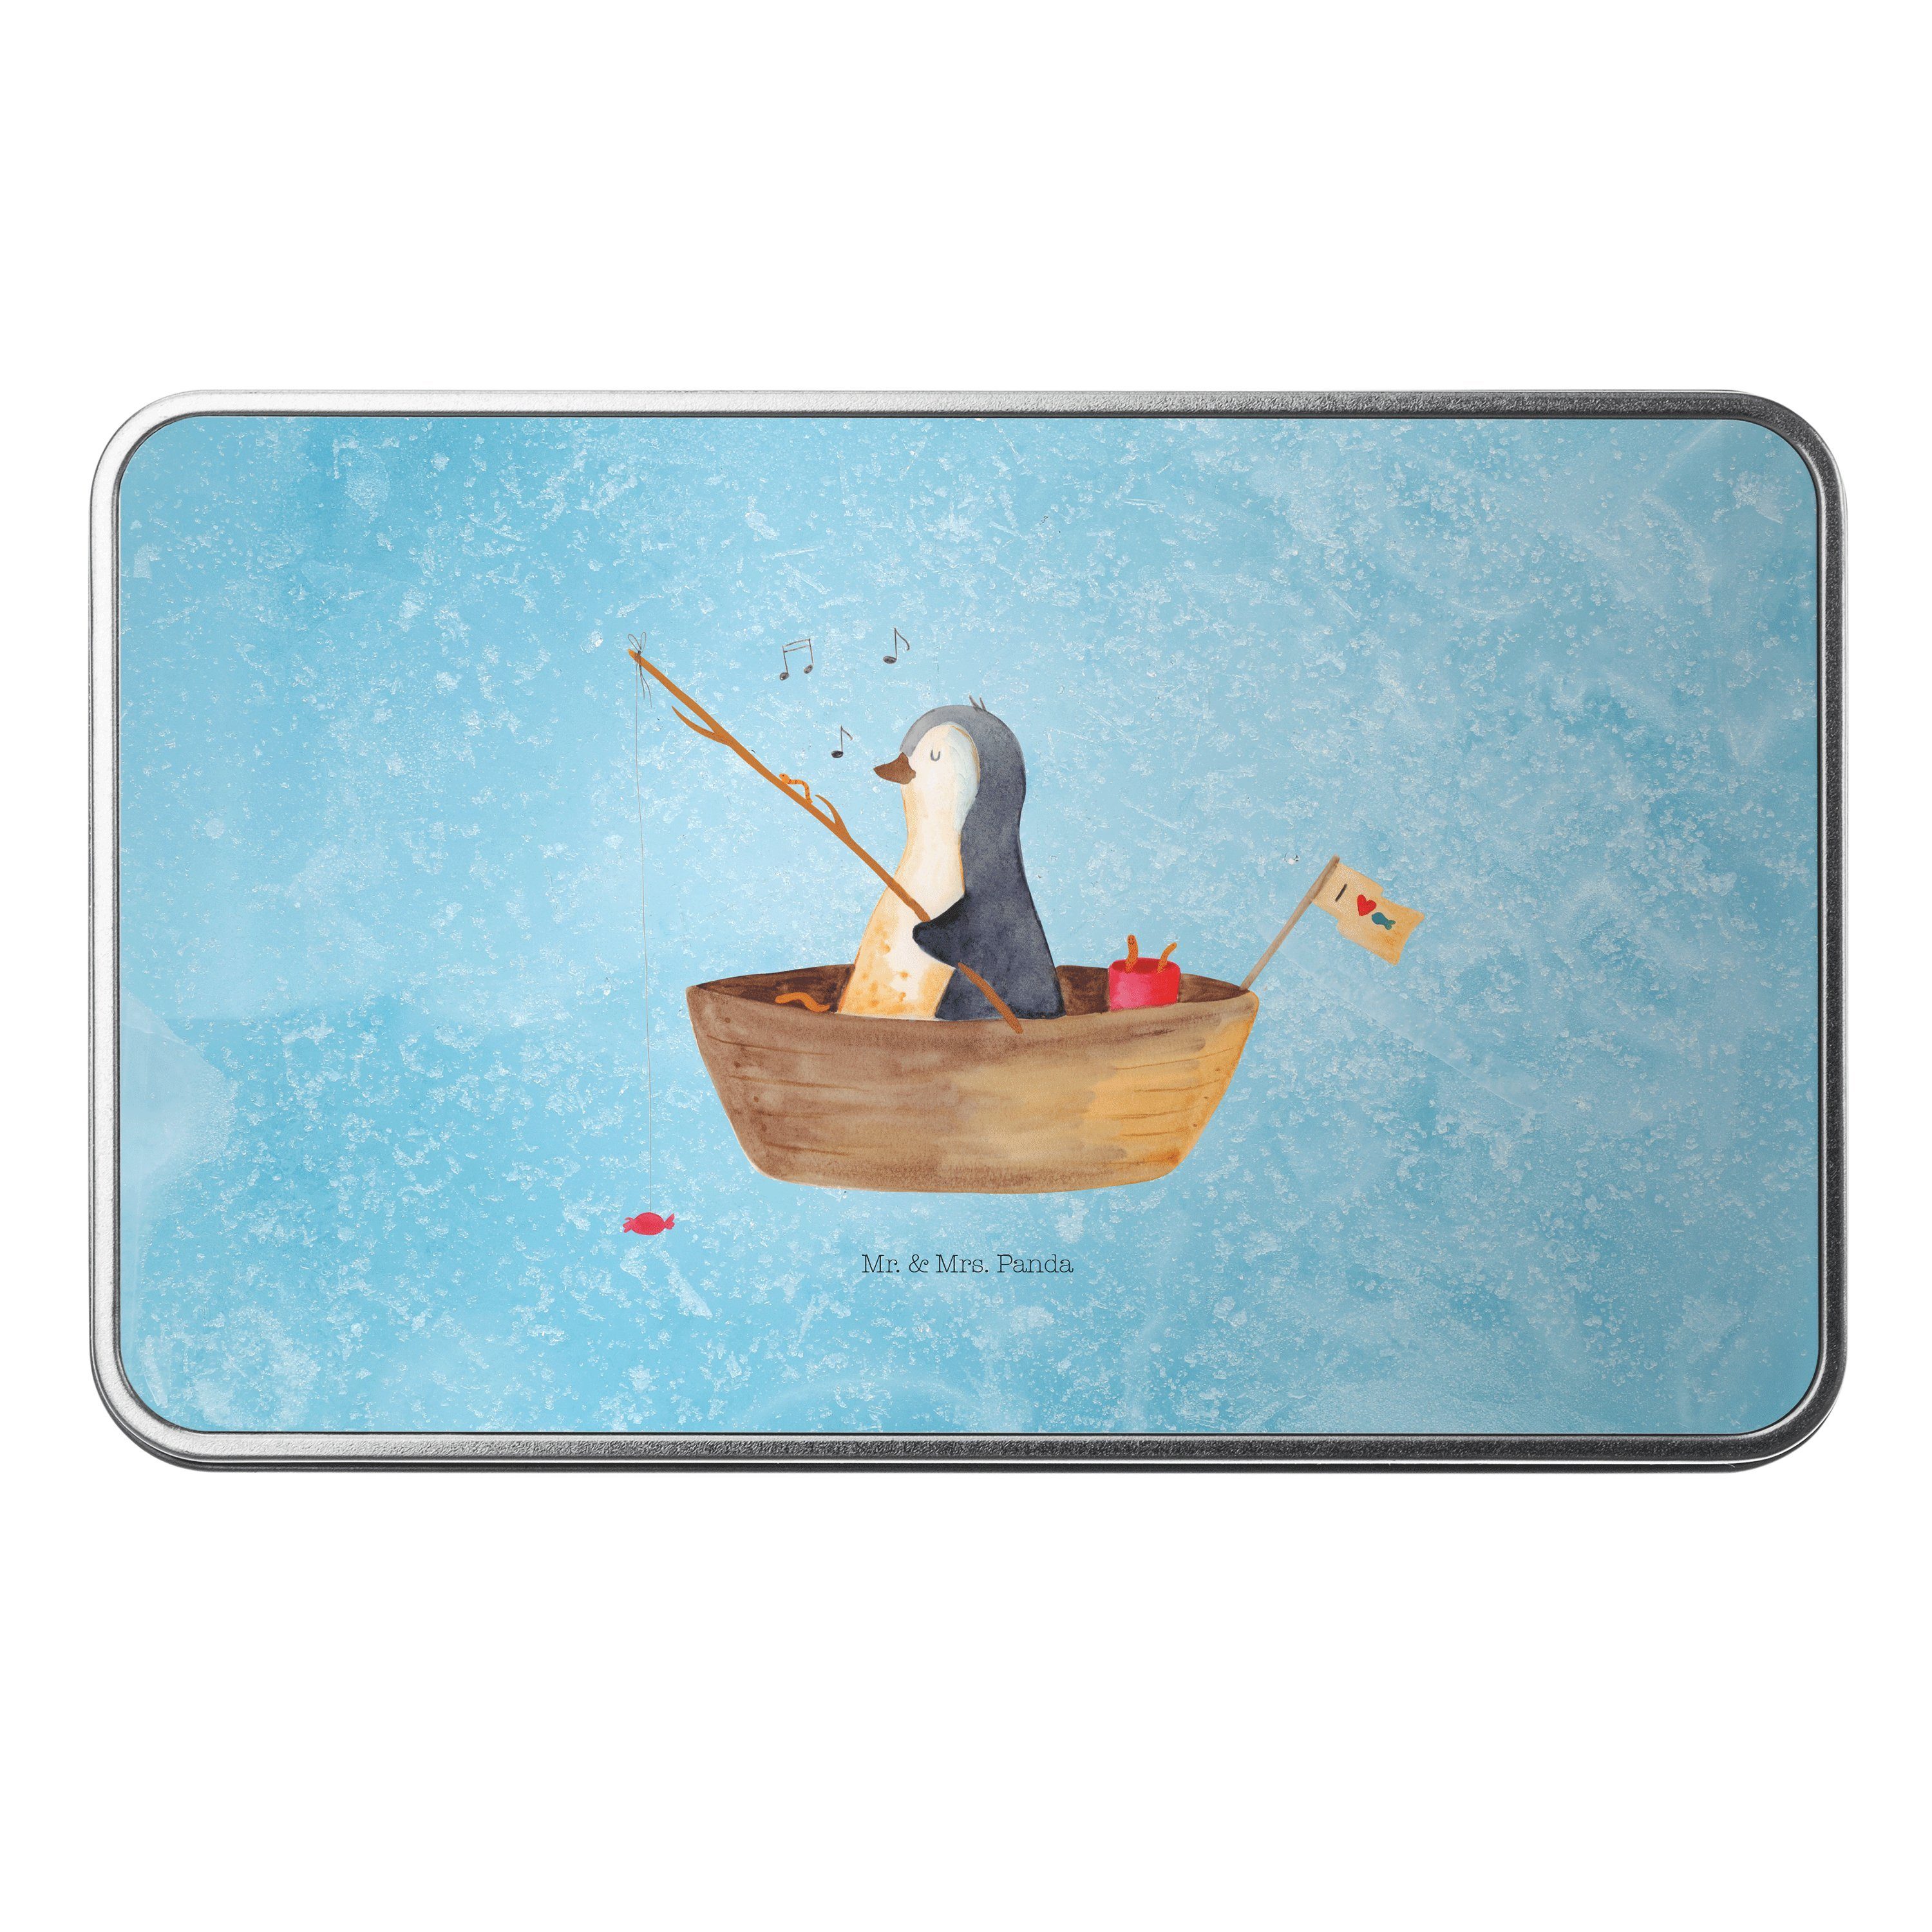 Dose, (1 Panda Mrs. Mr. Container, Leben, - & St) Blech Geschenk, - Eisblau Angelboot Dose Pinguin